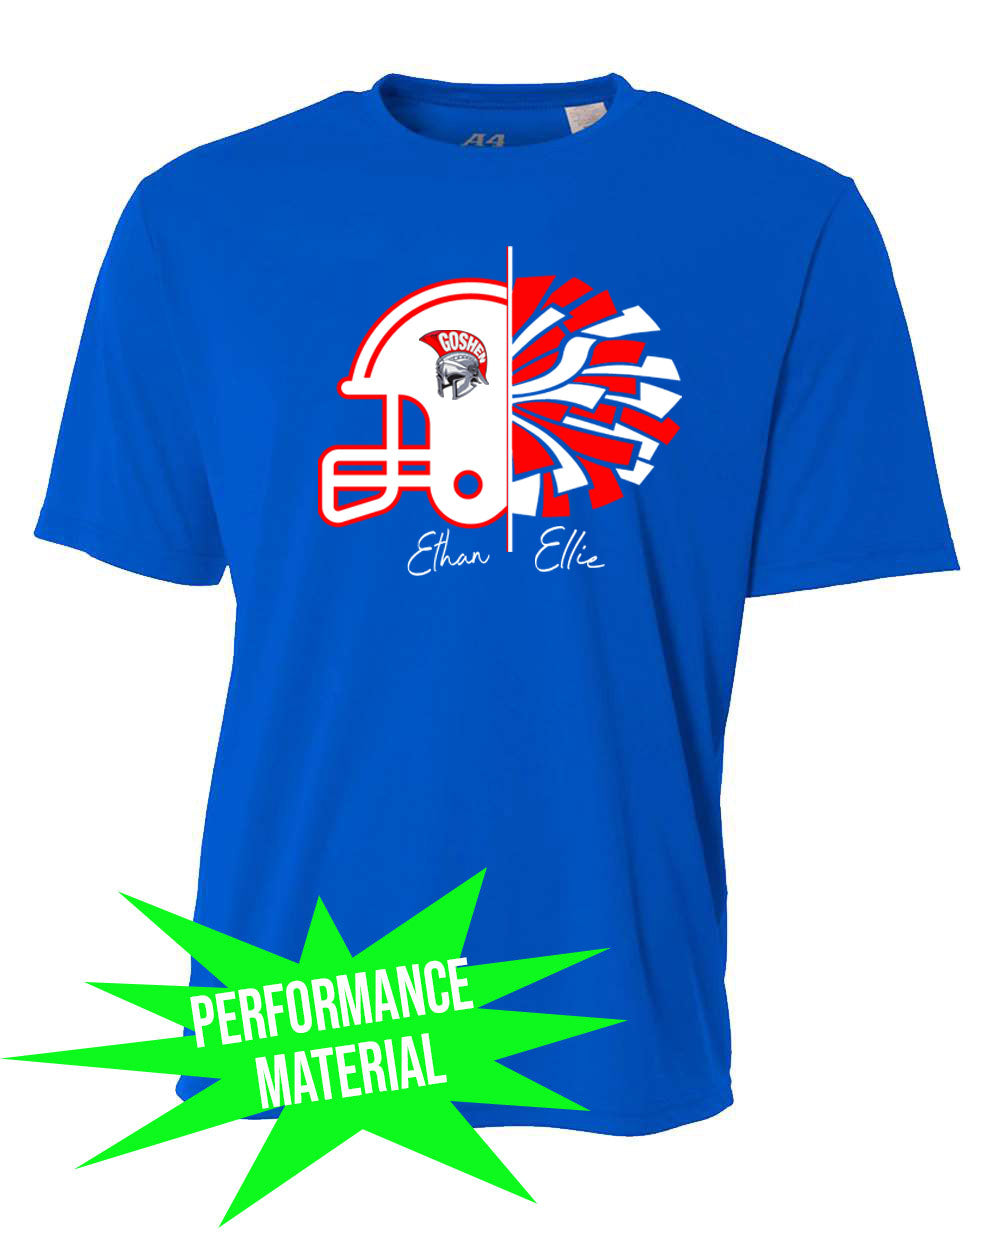 Goshen Cheer Performance Material design 11 T-Shirt